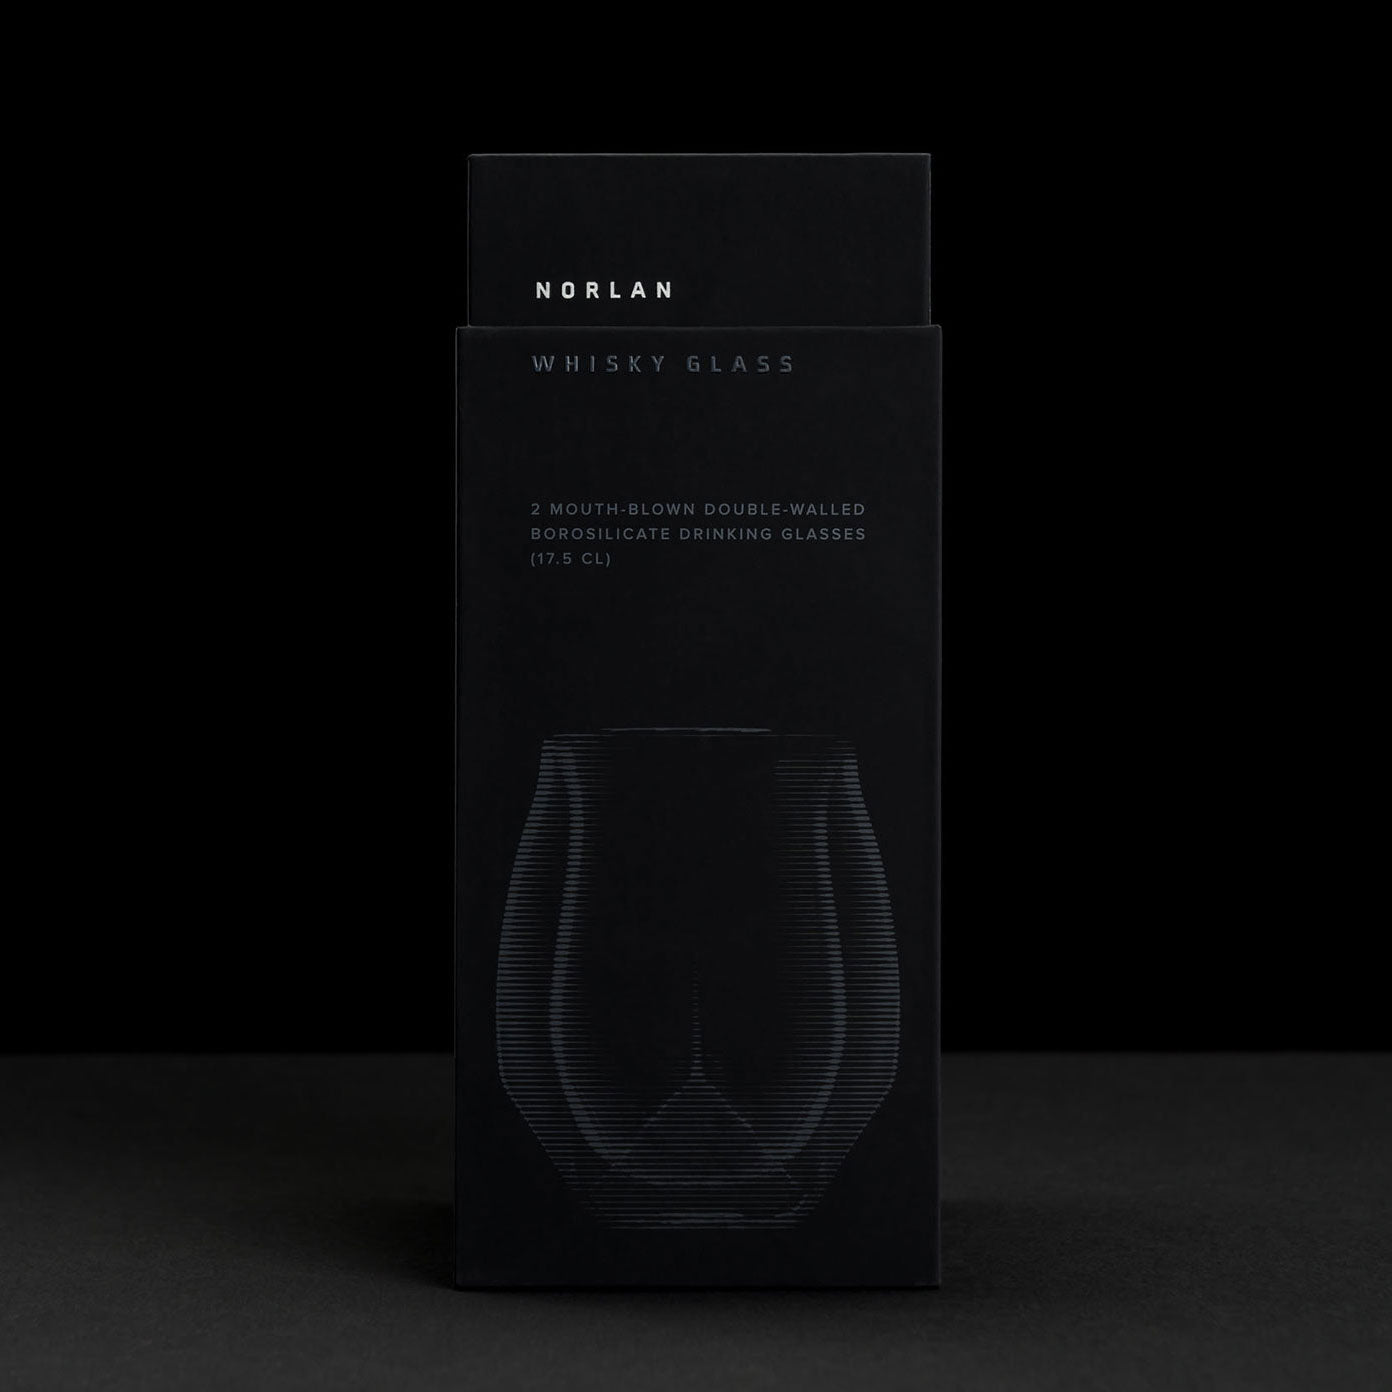 The Norlan Whisky Glass by Norlan — Kickstarter